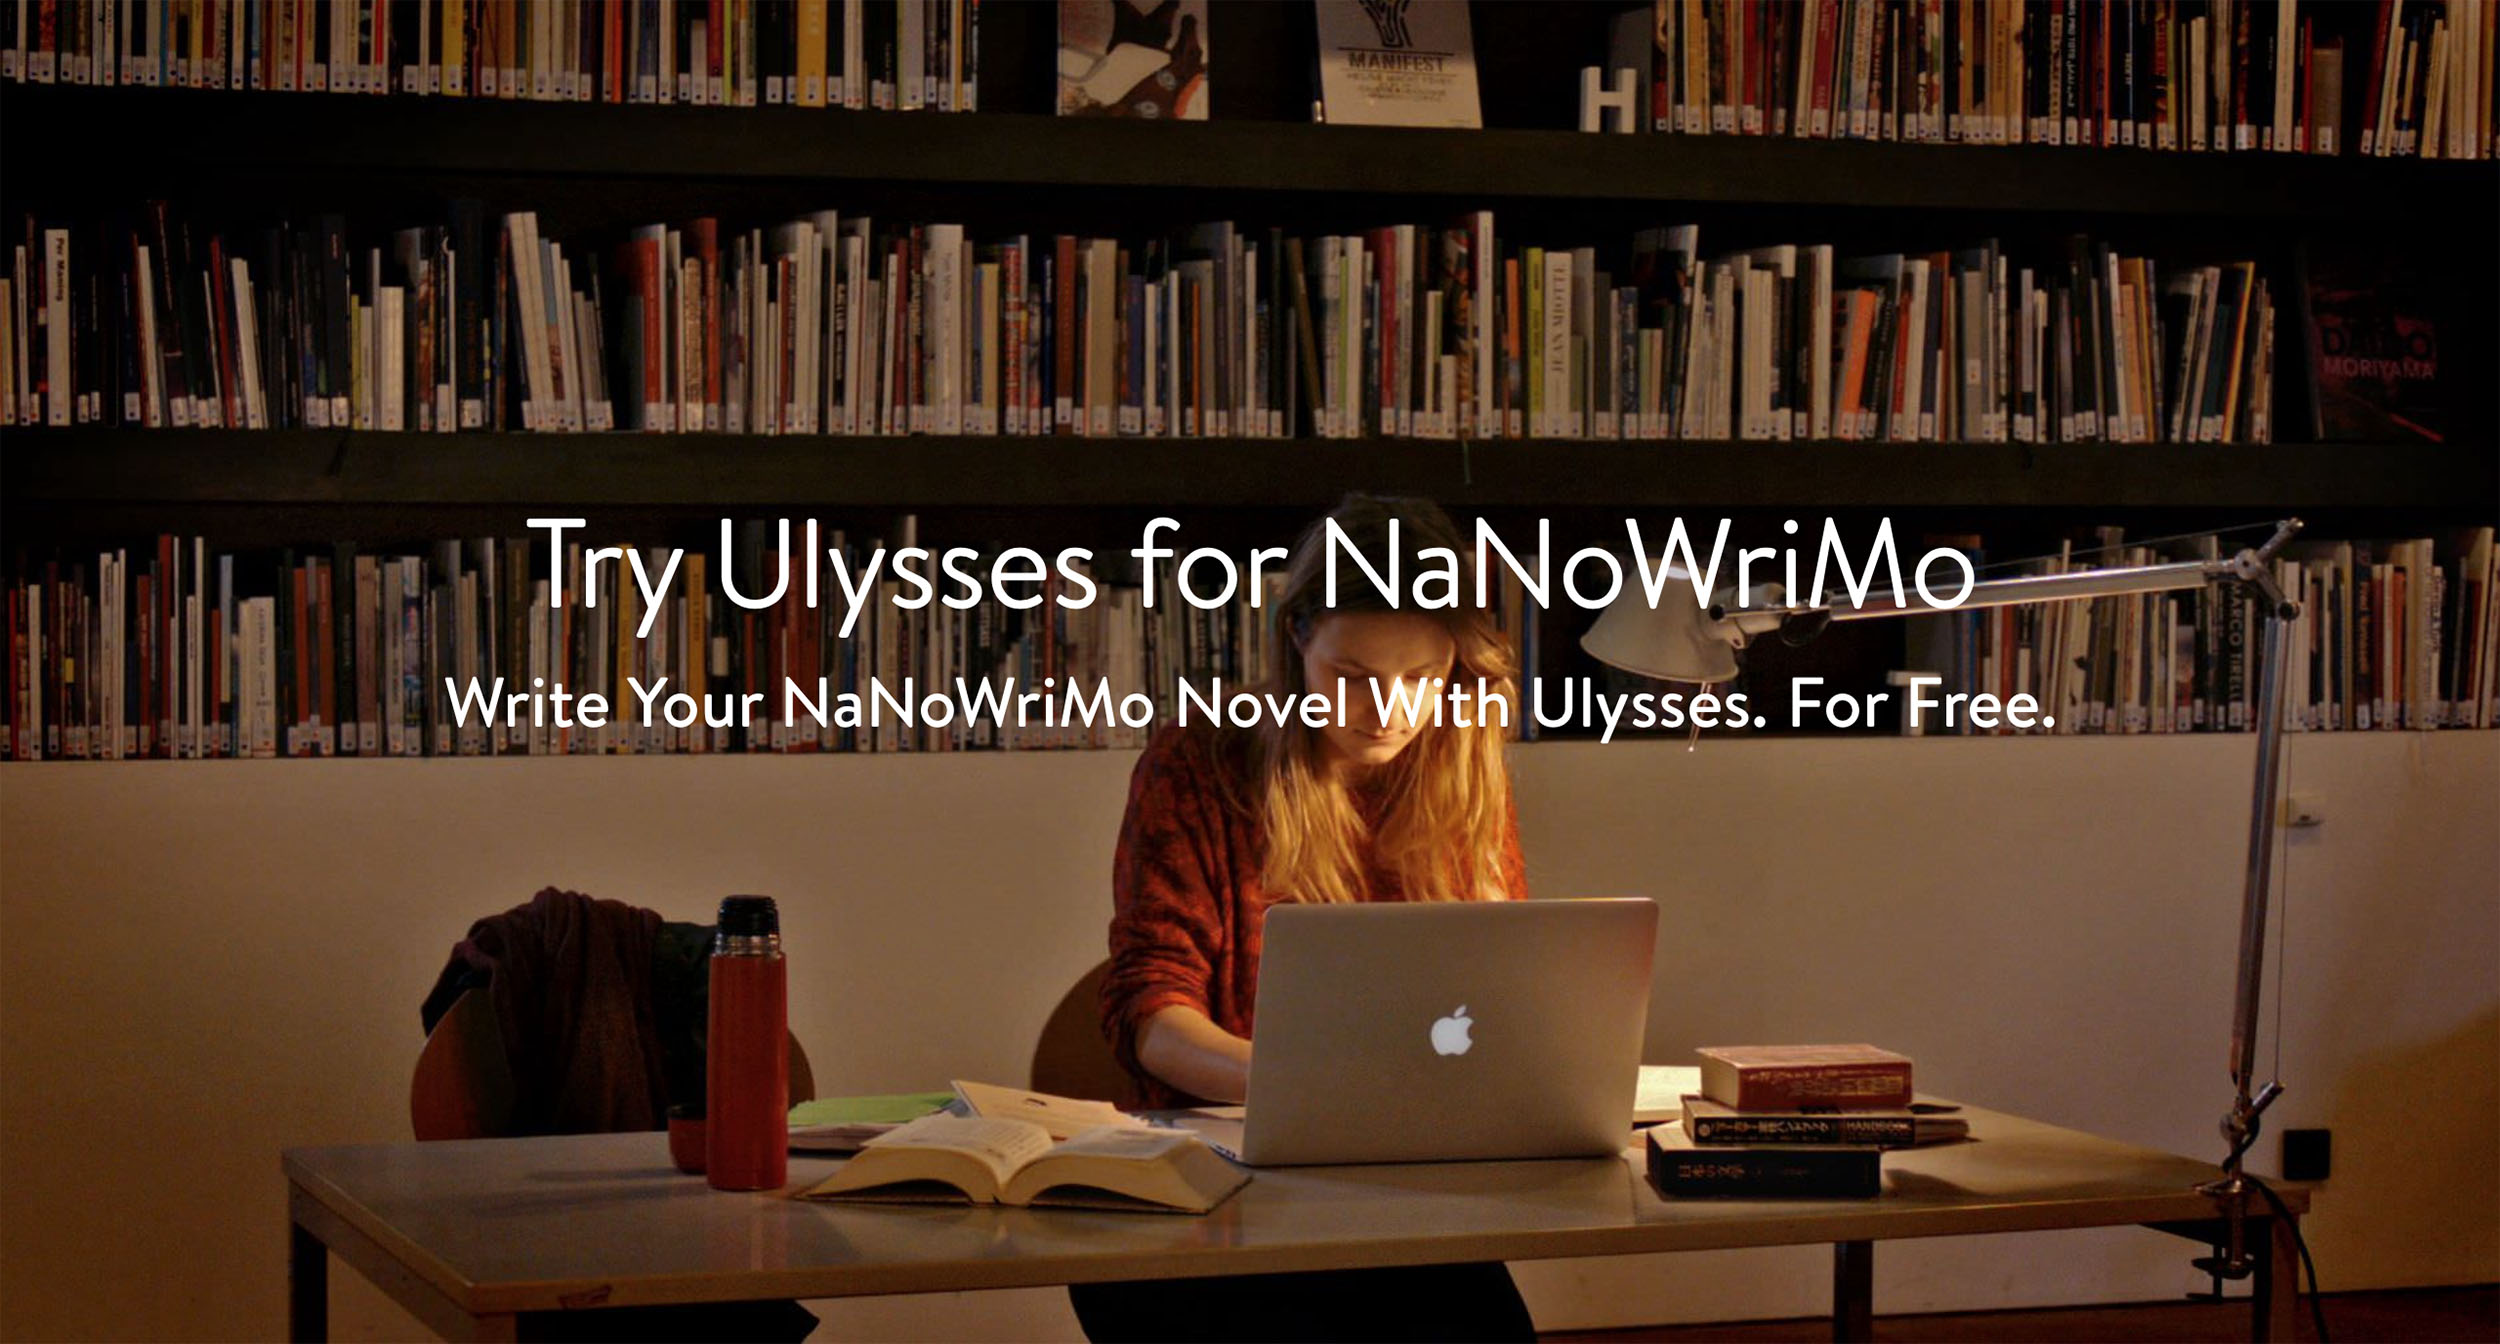 Ulysses gratis para NanoWriMo